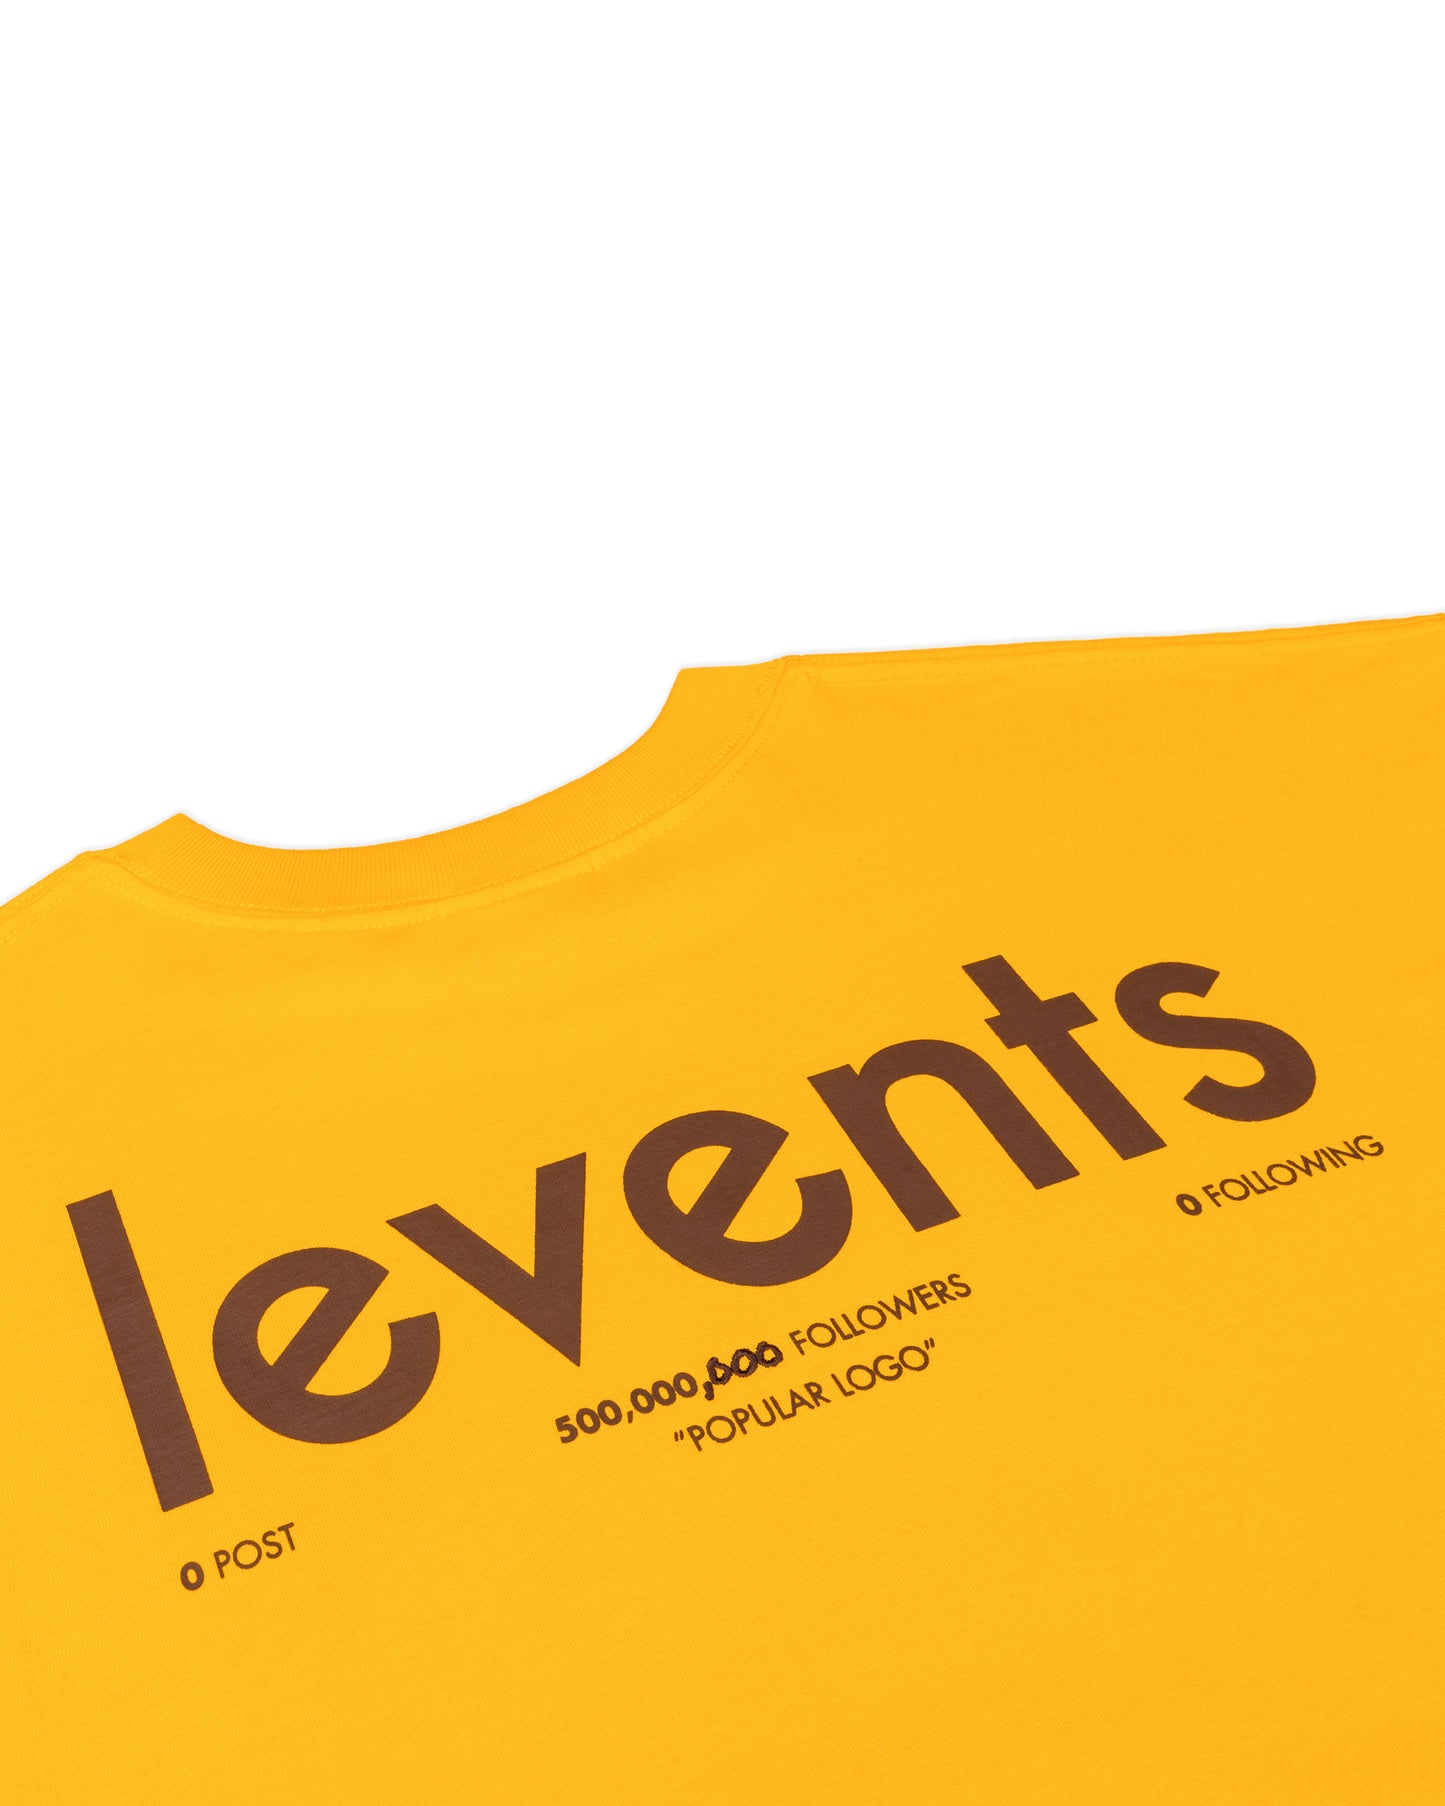 Levents® Popular Logo 2.0 Tee/ Yellow